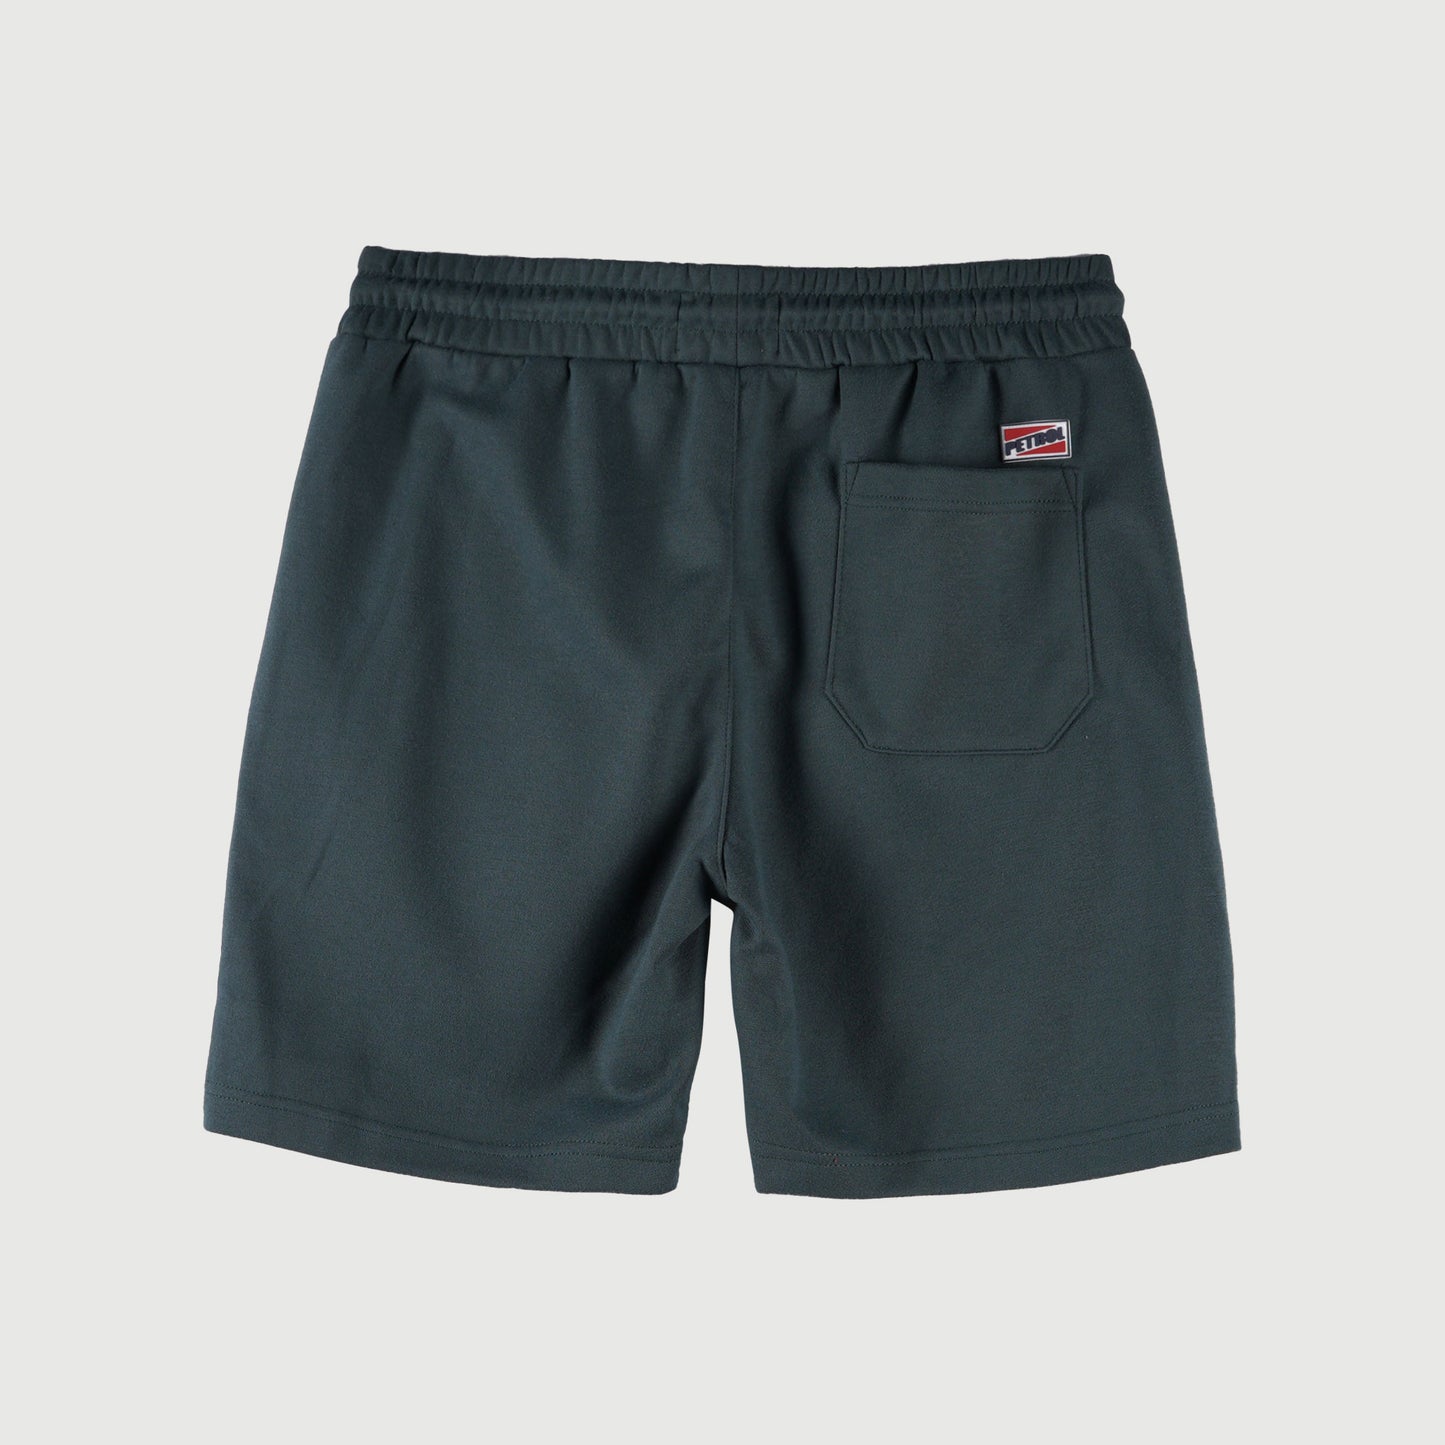 Petrol Basic Non-Denim Jogger Shorts for Men Regular Fitting Garment Wash Fabric Casual short Black Jogger short for Men 117458 (Dark Green)